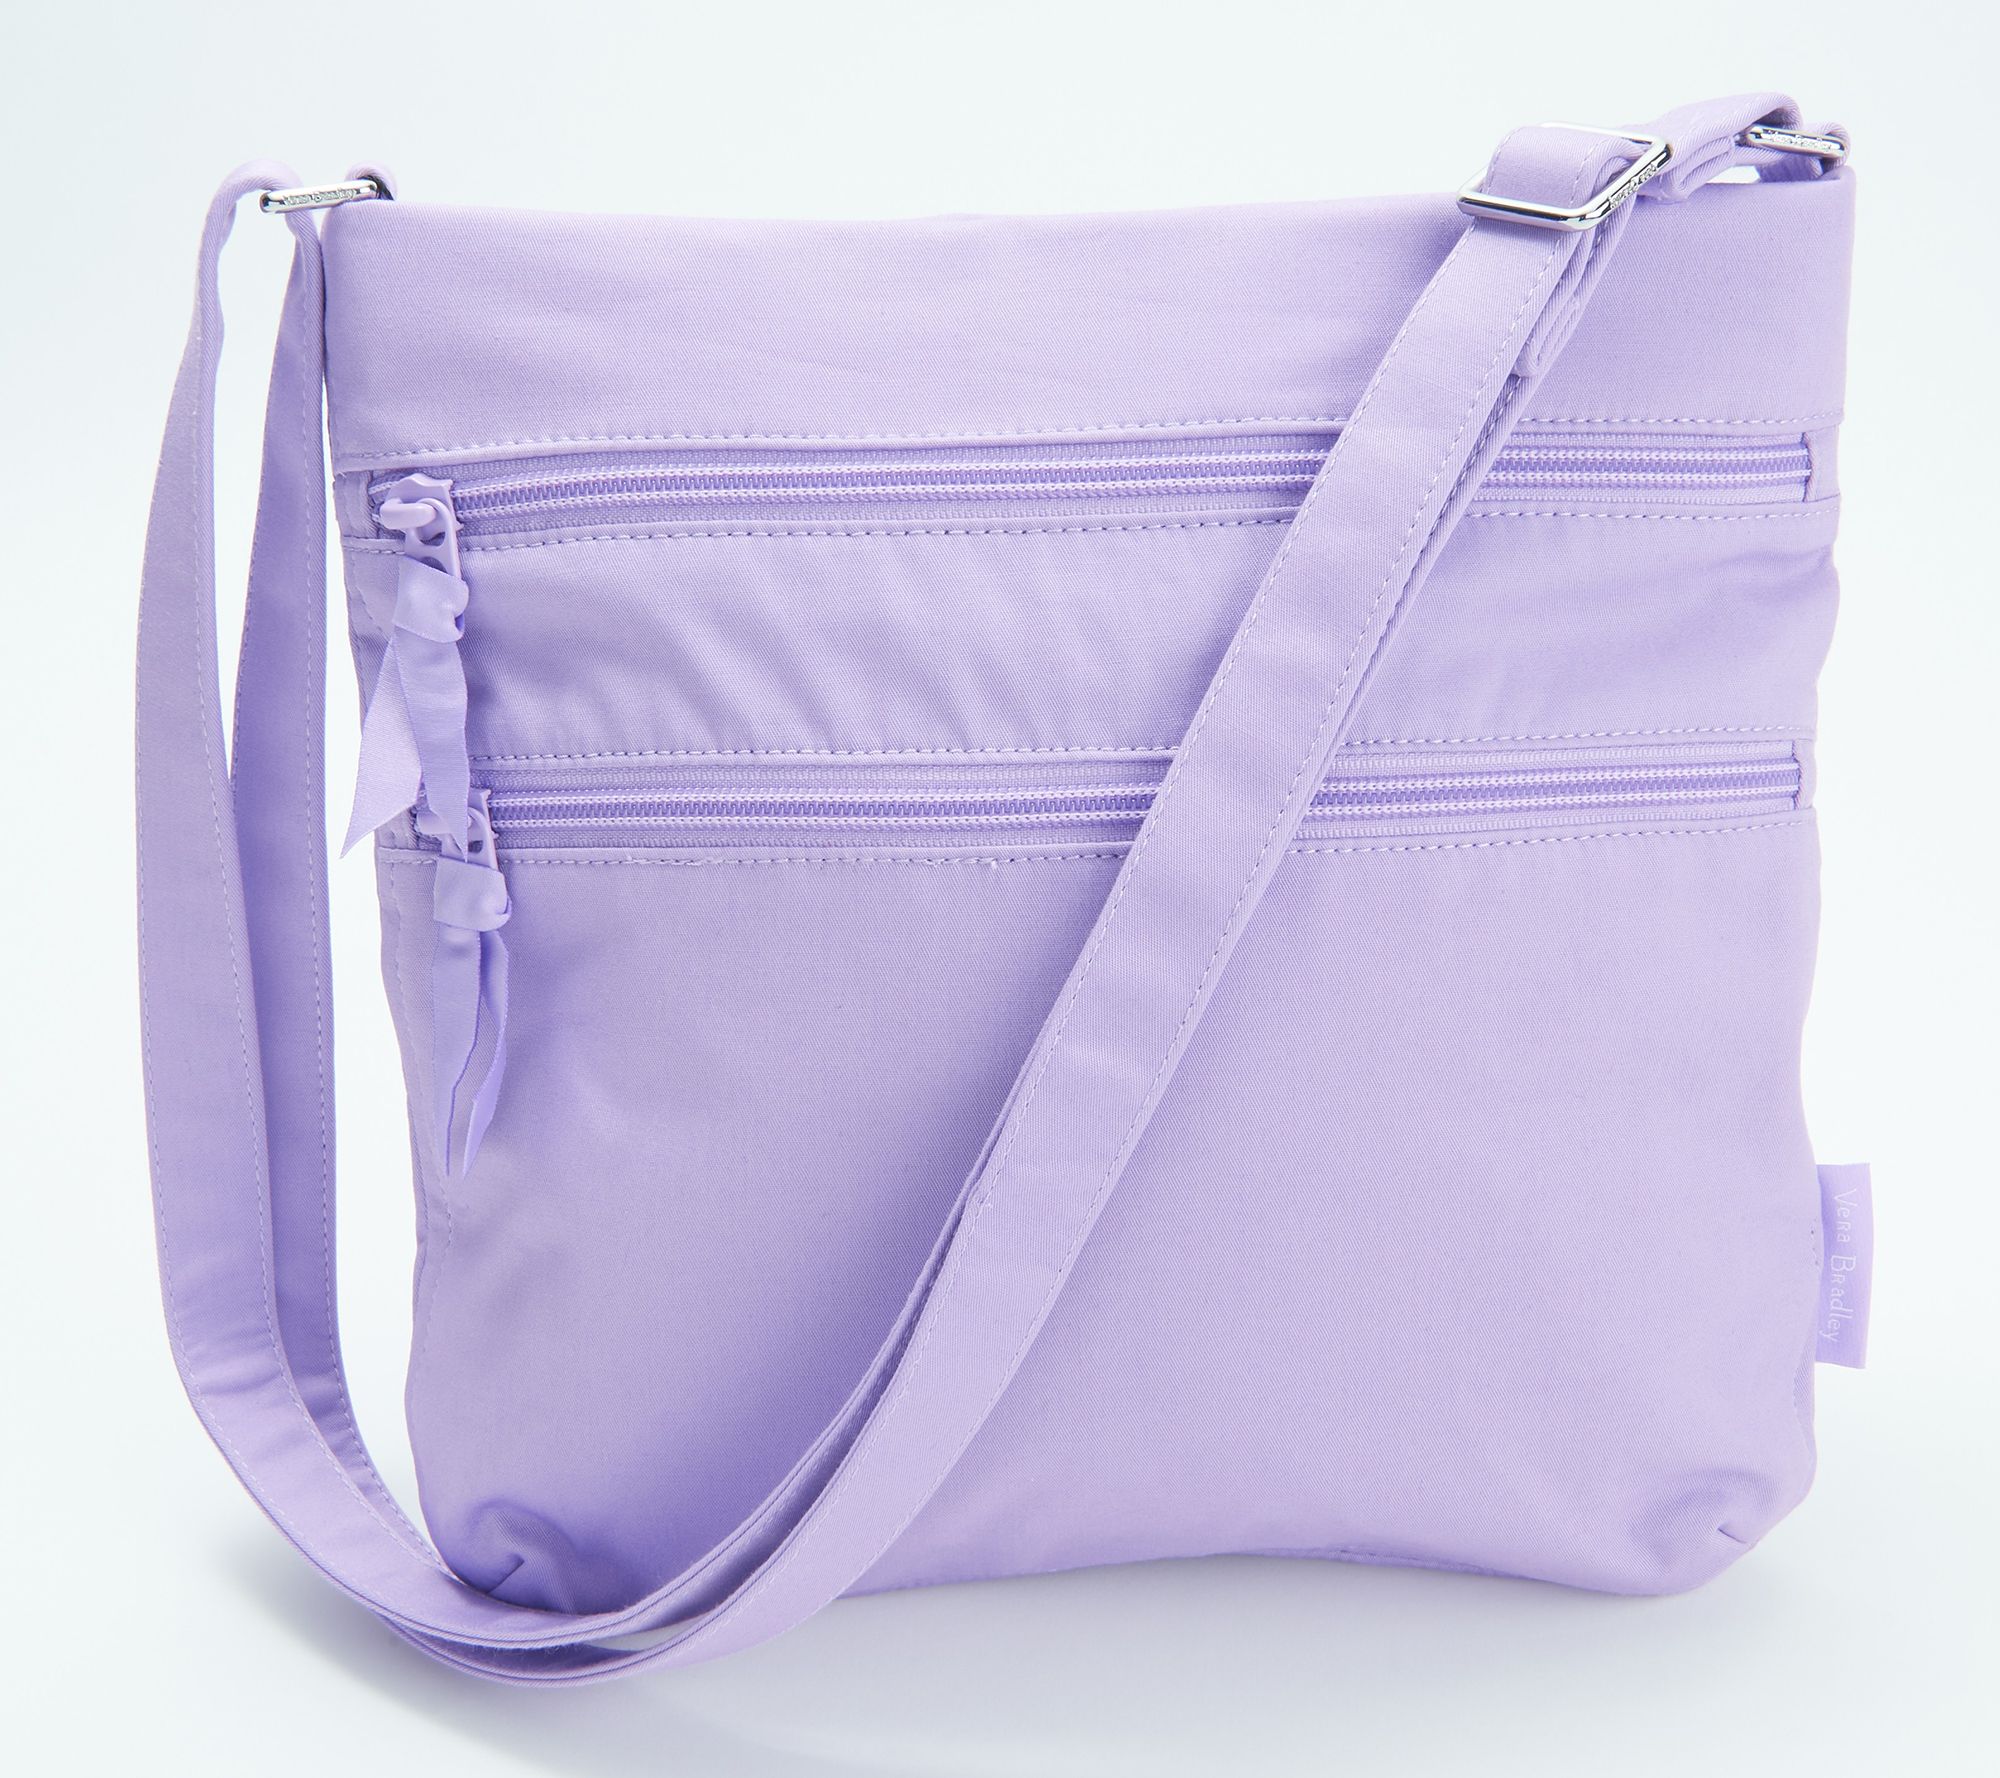 Candie's Women's Shoulder Bags - Purple